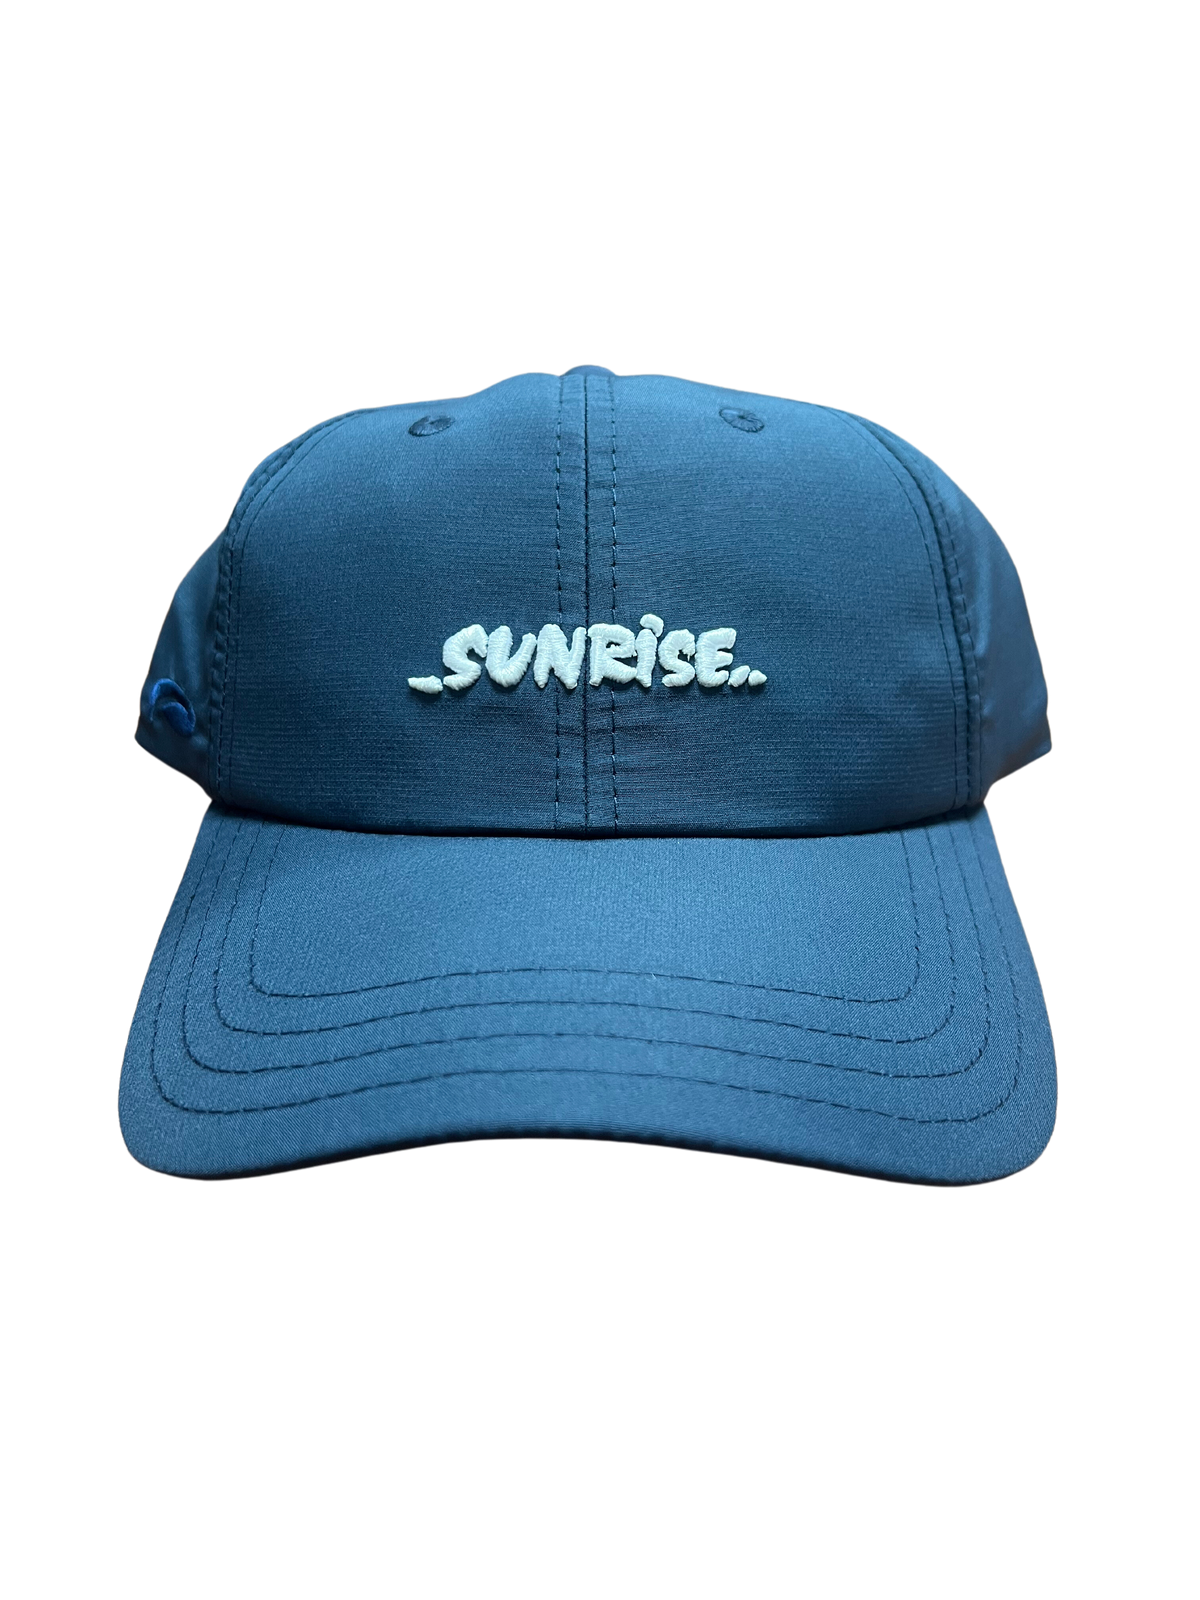 Sunrise Surf Shop Performance 6 Panel Hat